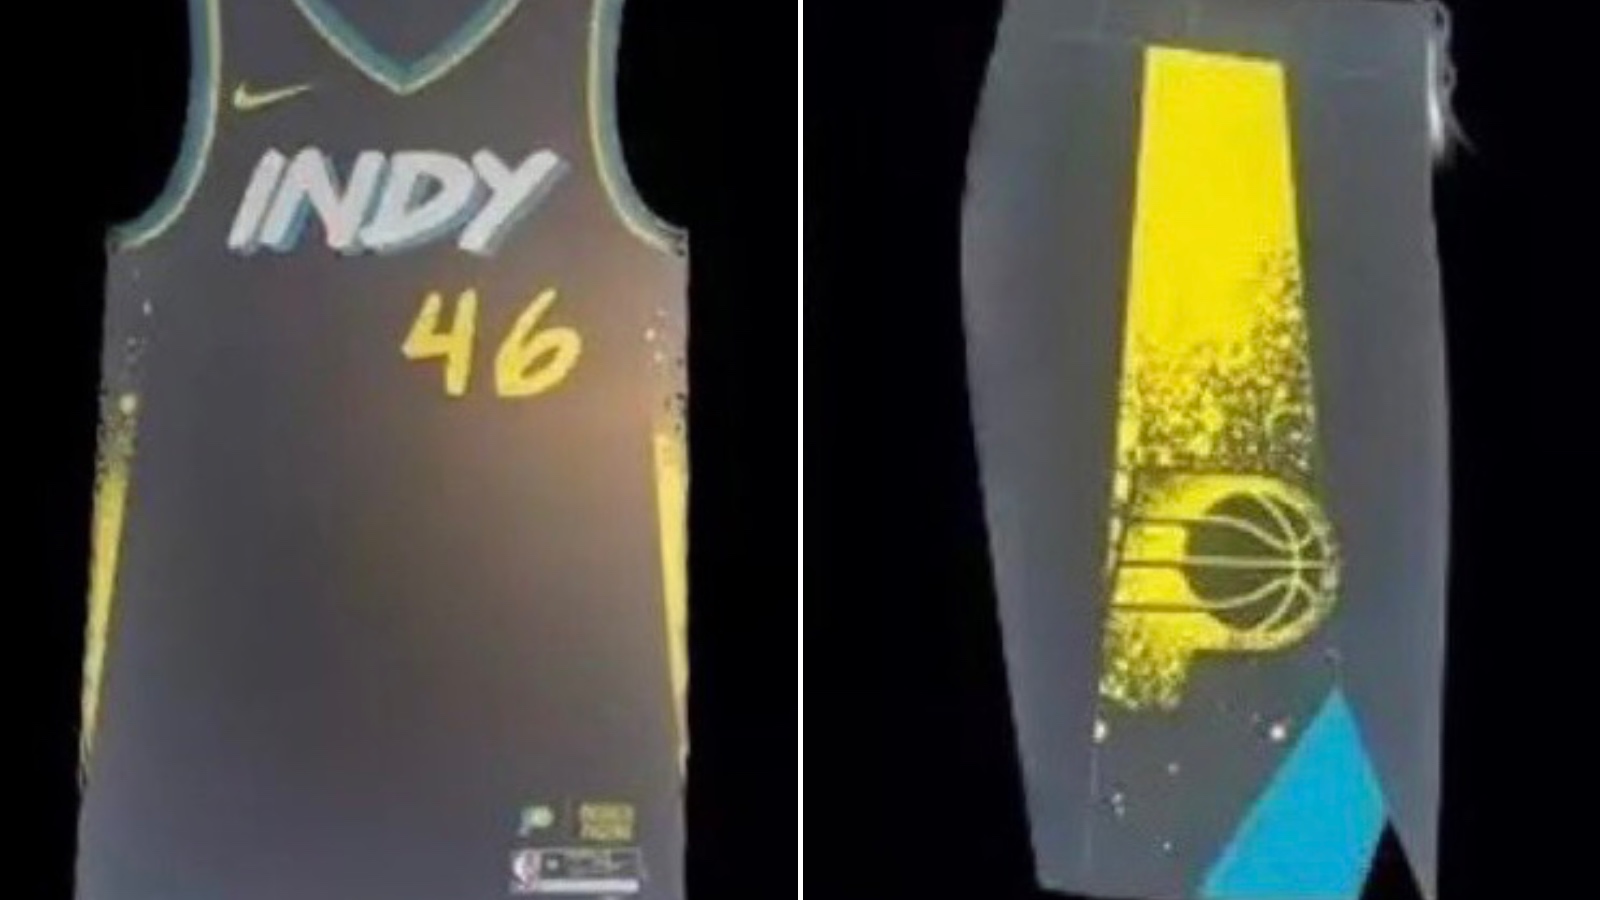 Pacers' 2022-23 Nike City Edition Uniform Leaks